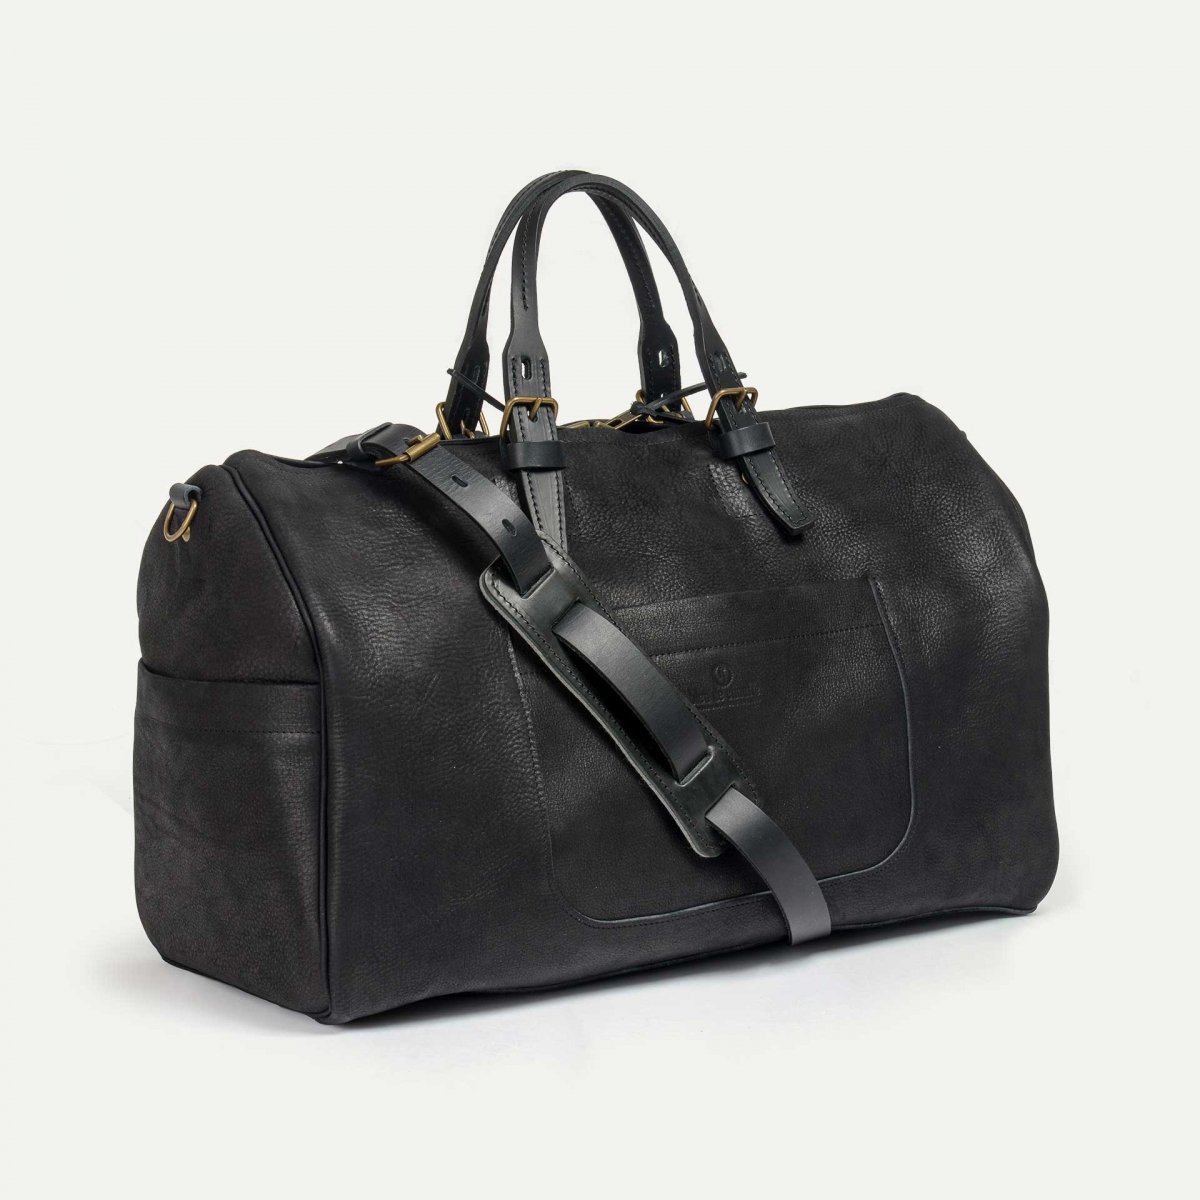 Hobo Travel bag - Charcoal black / Waxed Leather (image n°2)